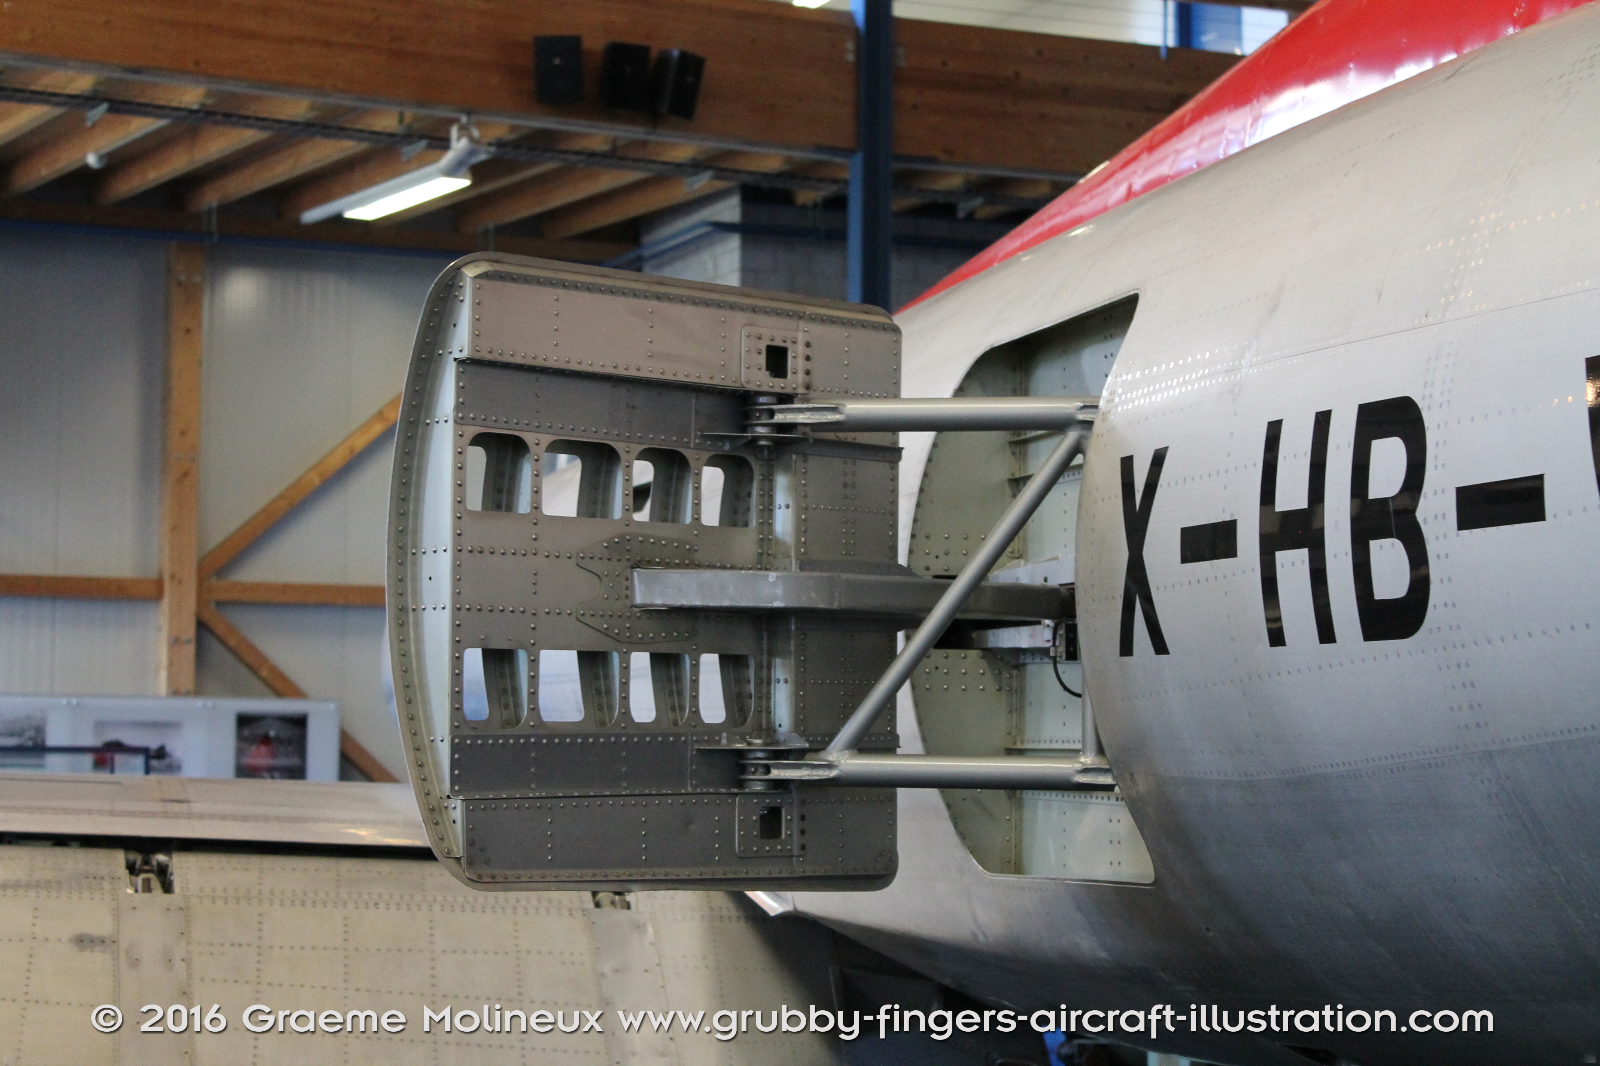 FFA_P-16_X-HB-VAD_Swiss_Air_Force_Museum_2015_40_GrubbyFingers